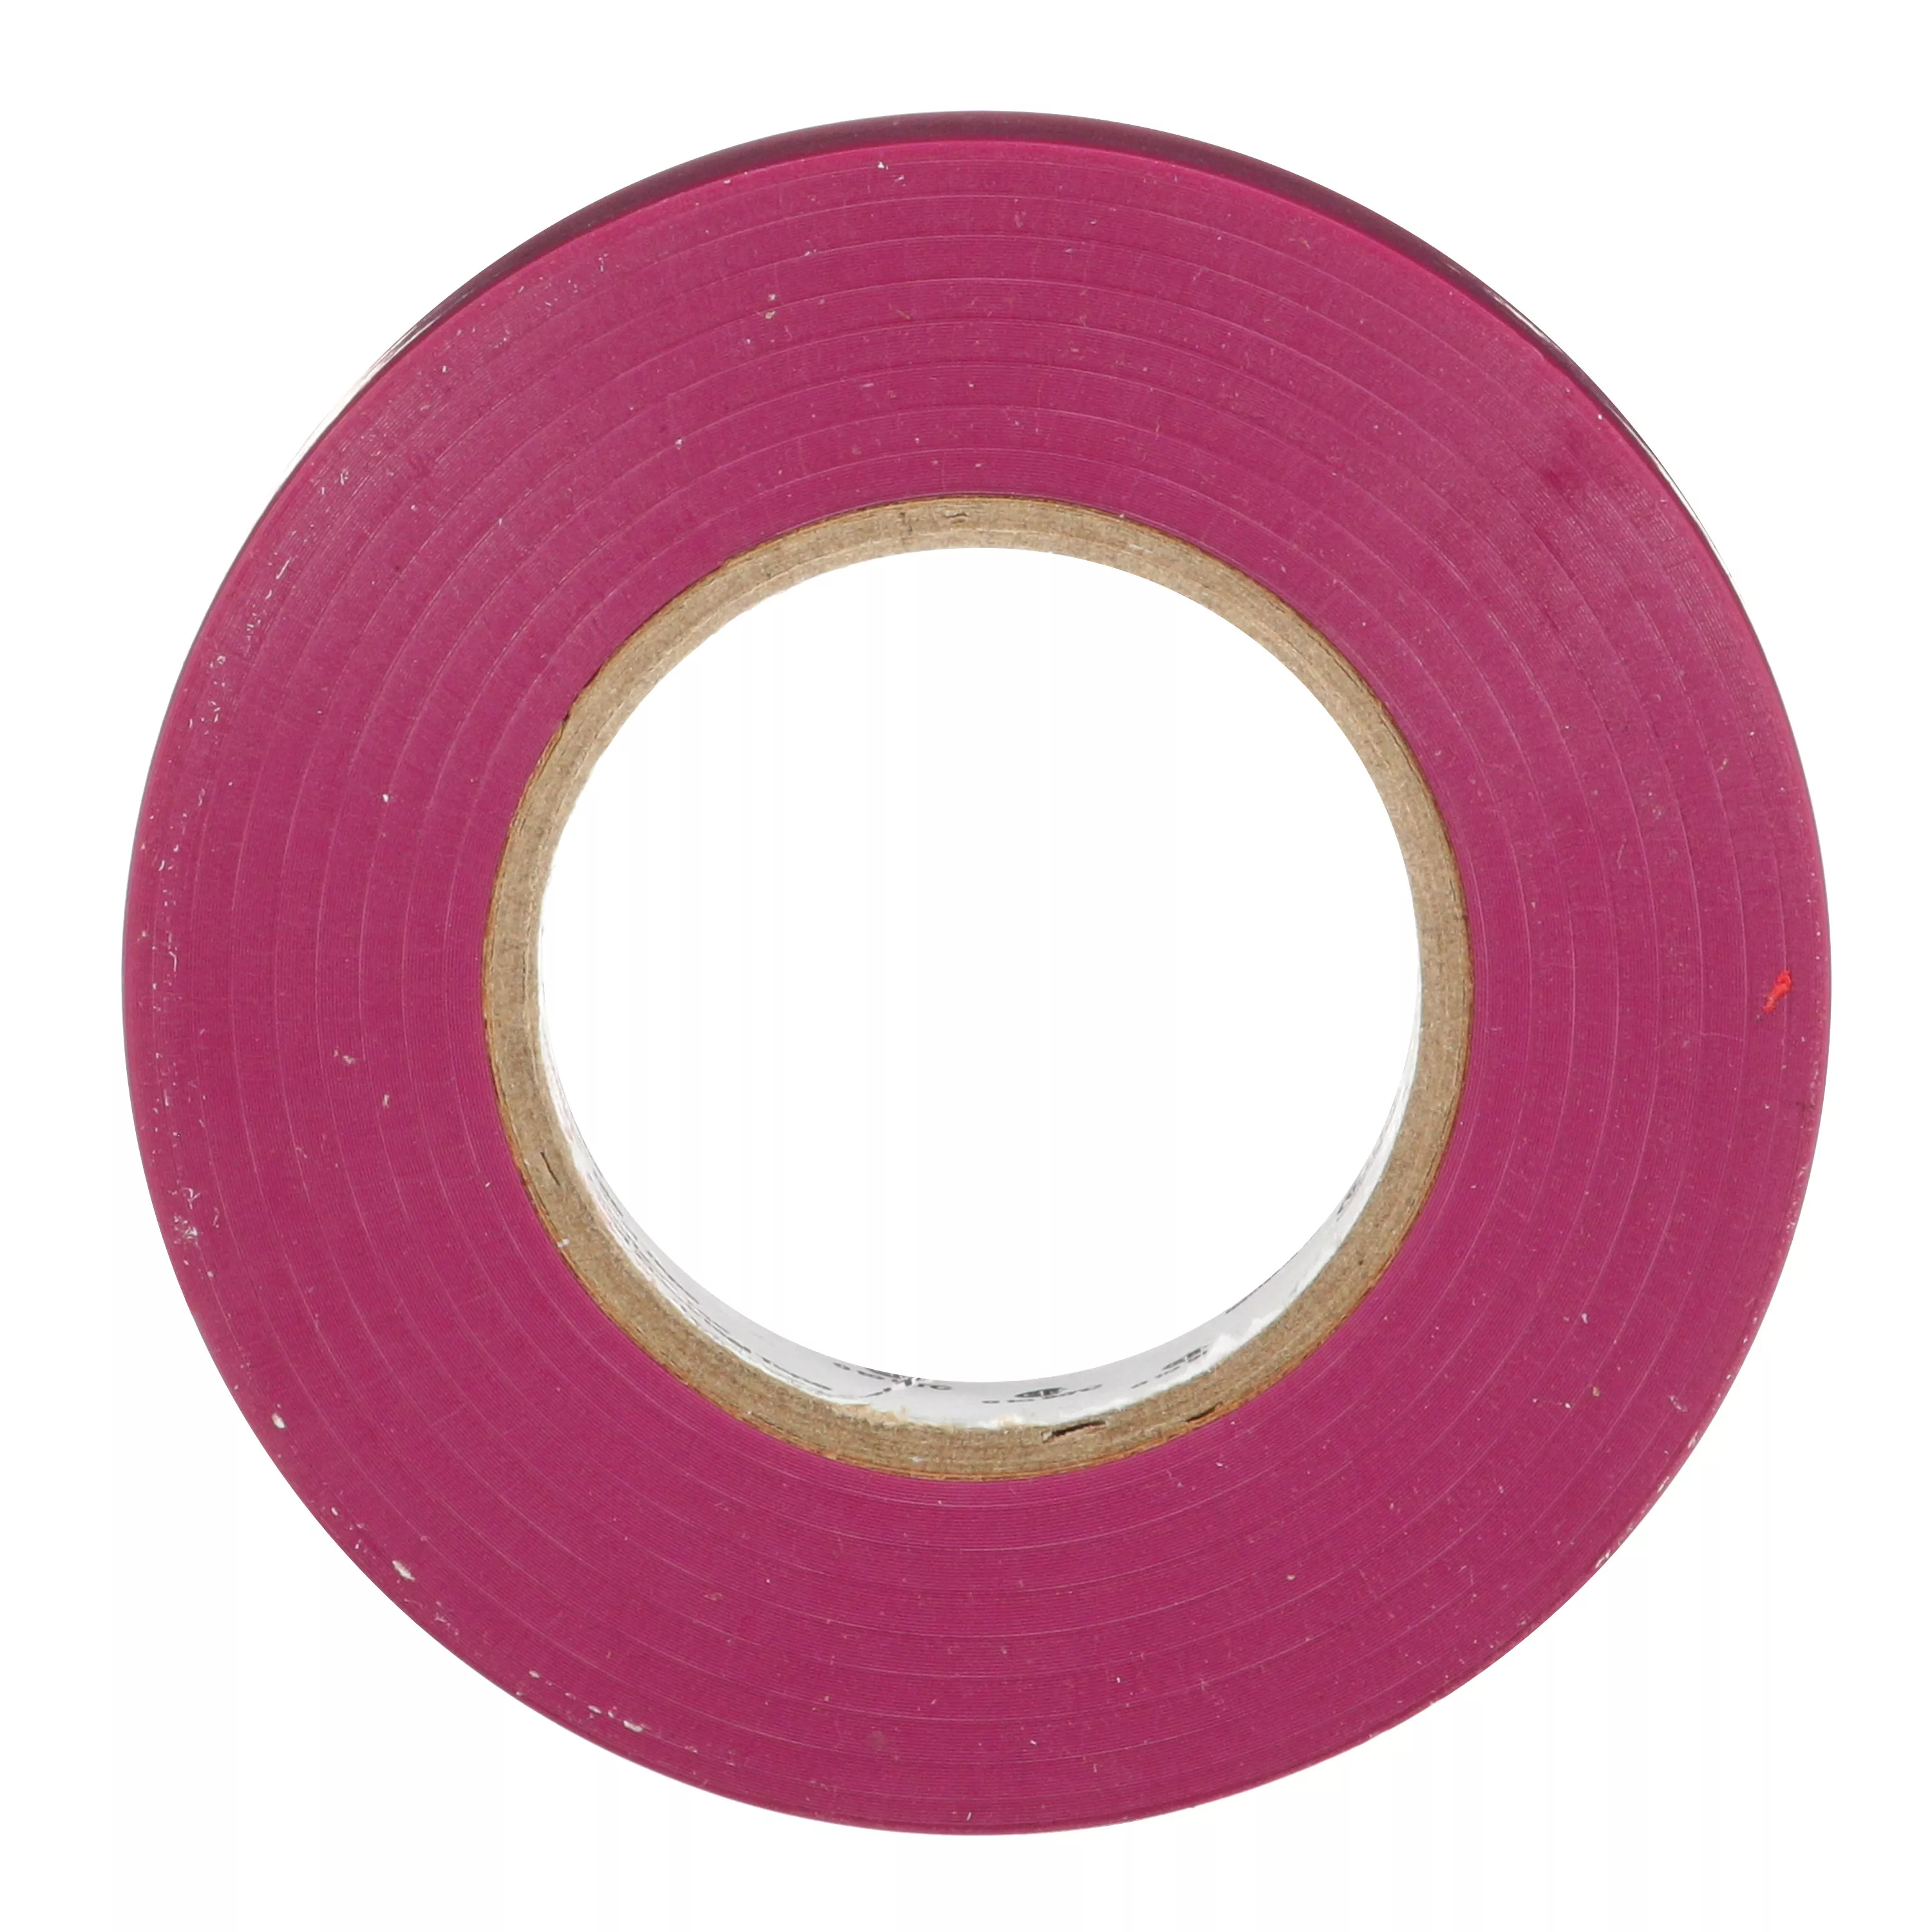 SKU 7100169434 | 3M™ Temflex™ Vinyl Electrical Tape 165